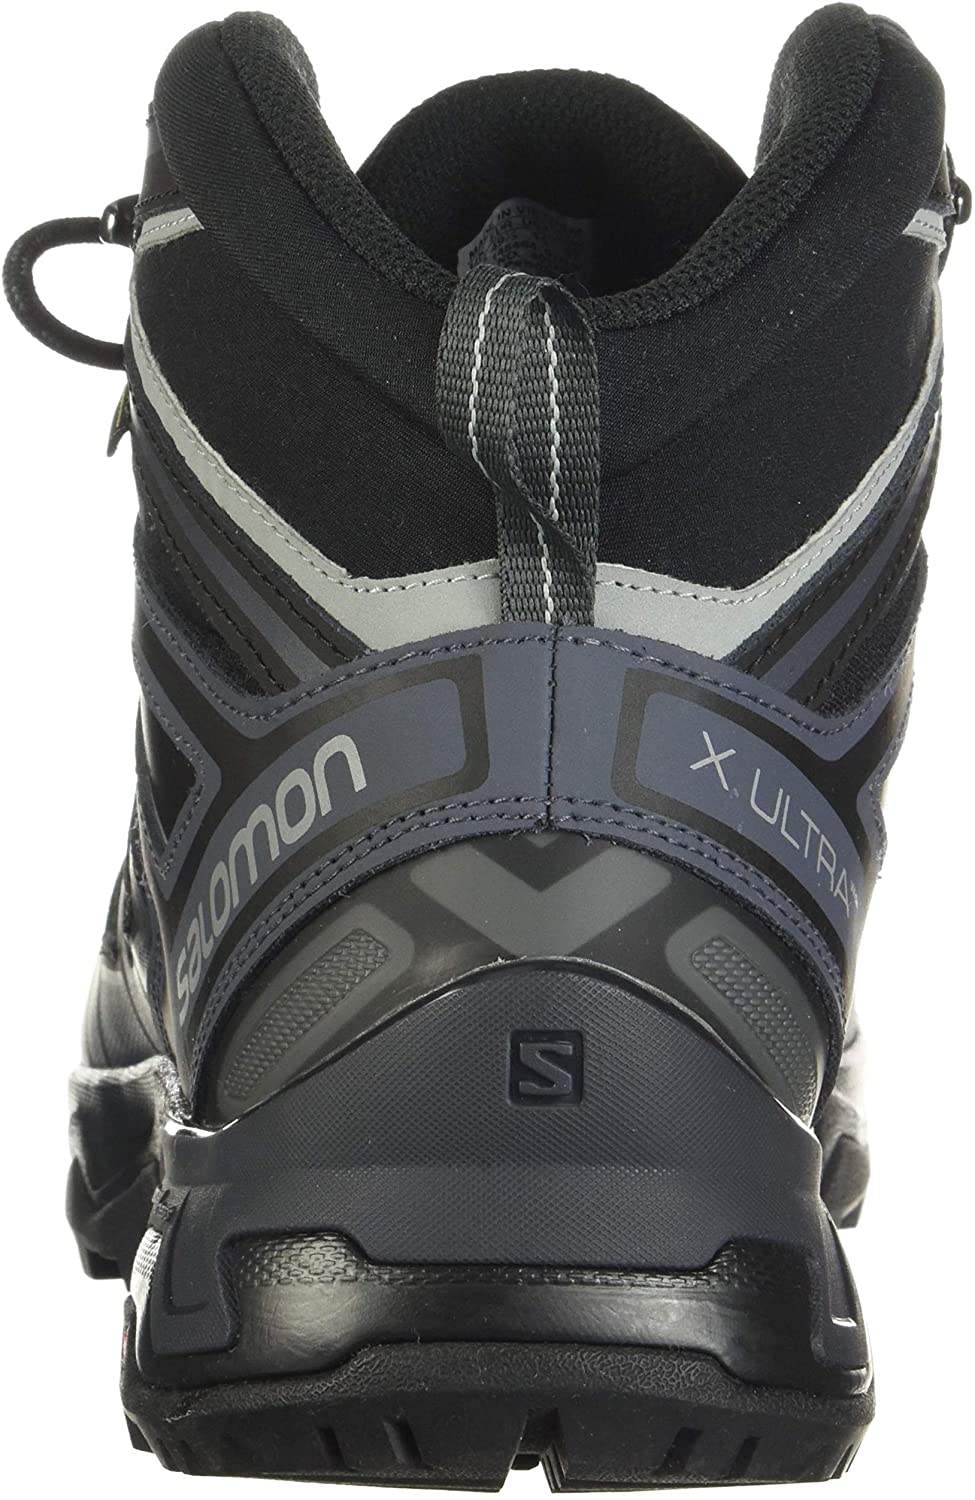 Salomon X Ultra 3 Mid GTX Men's Hiking Boots | eBay